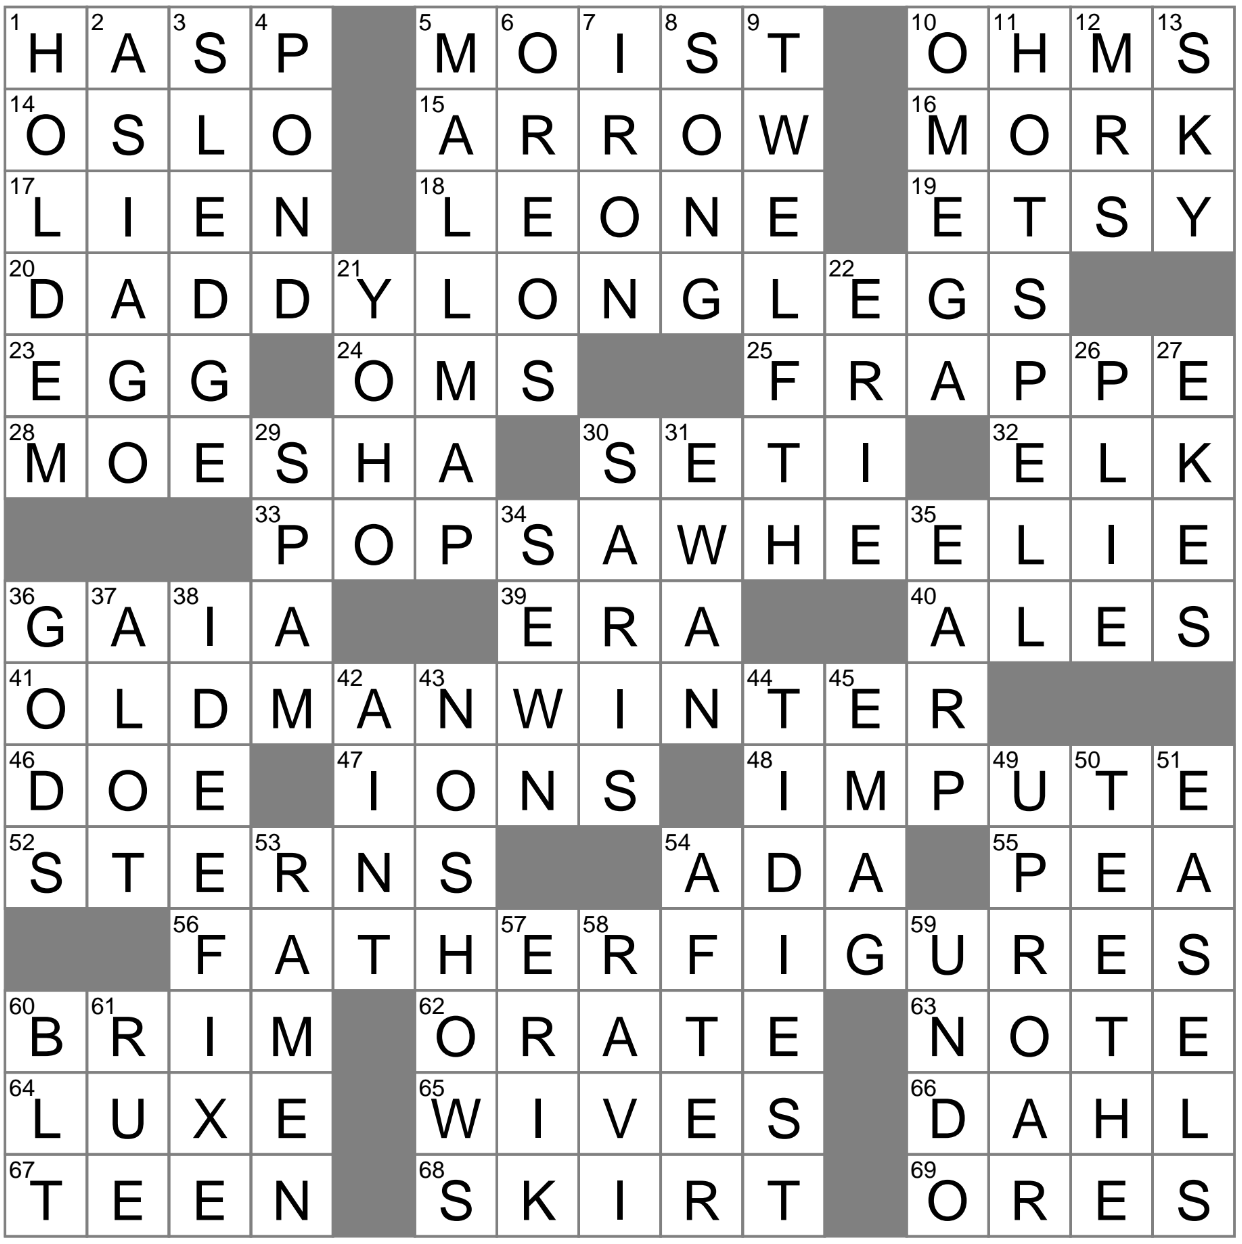 dissertations crossword clue 6 letters